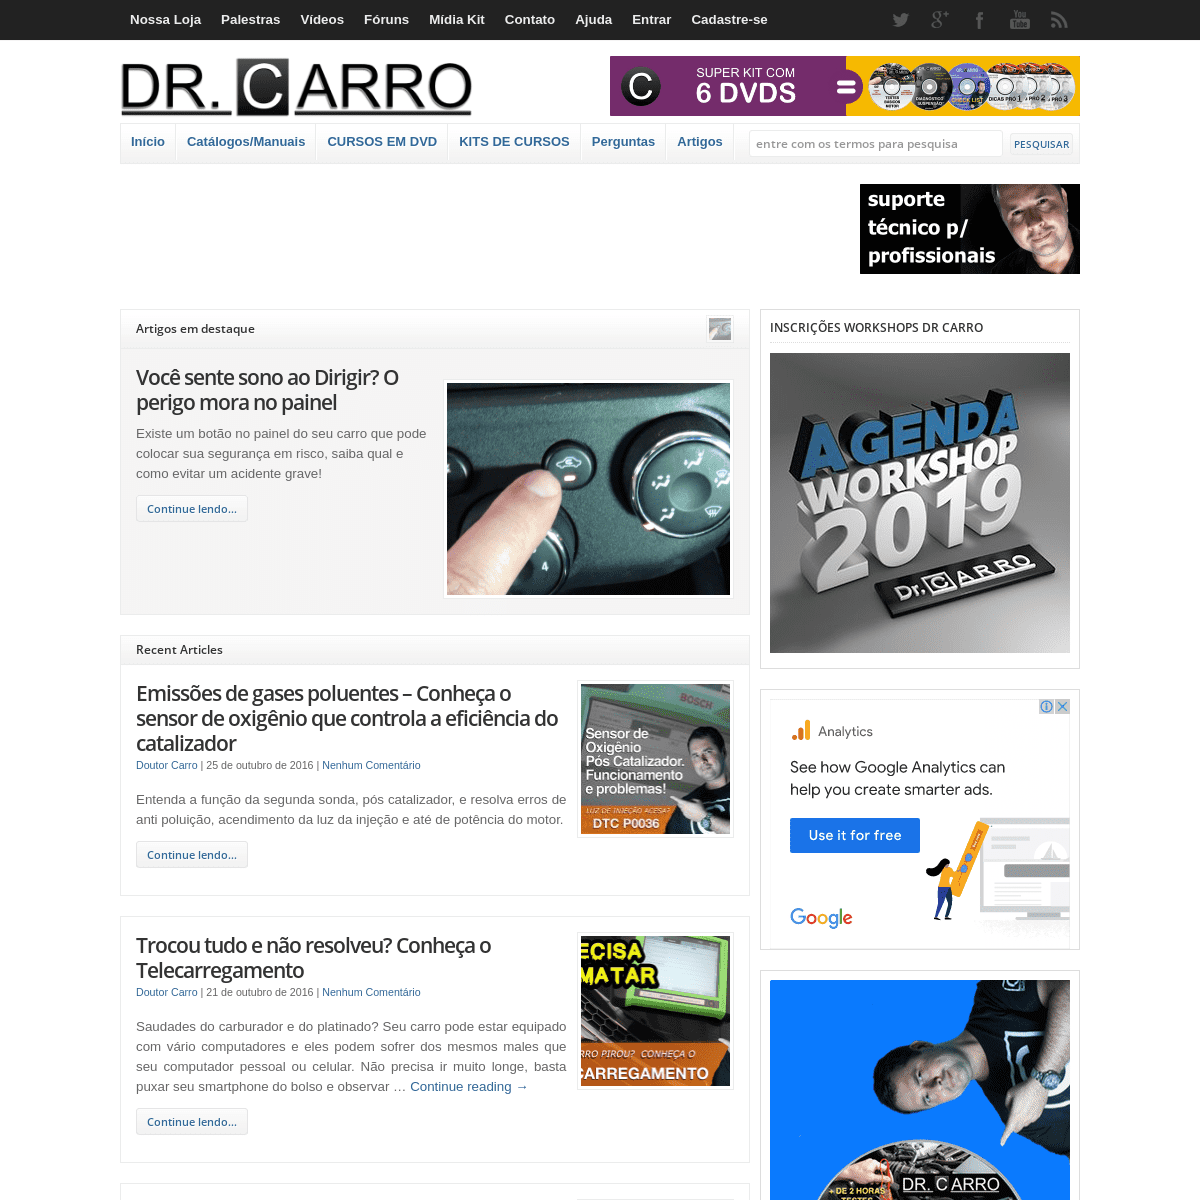 A complete backup of doutorcarro.com.br